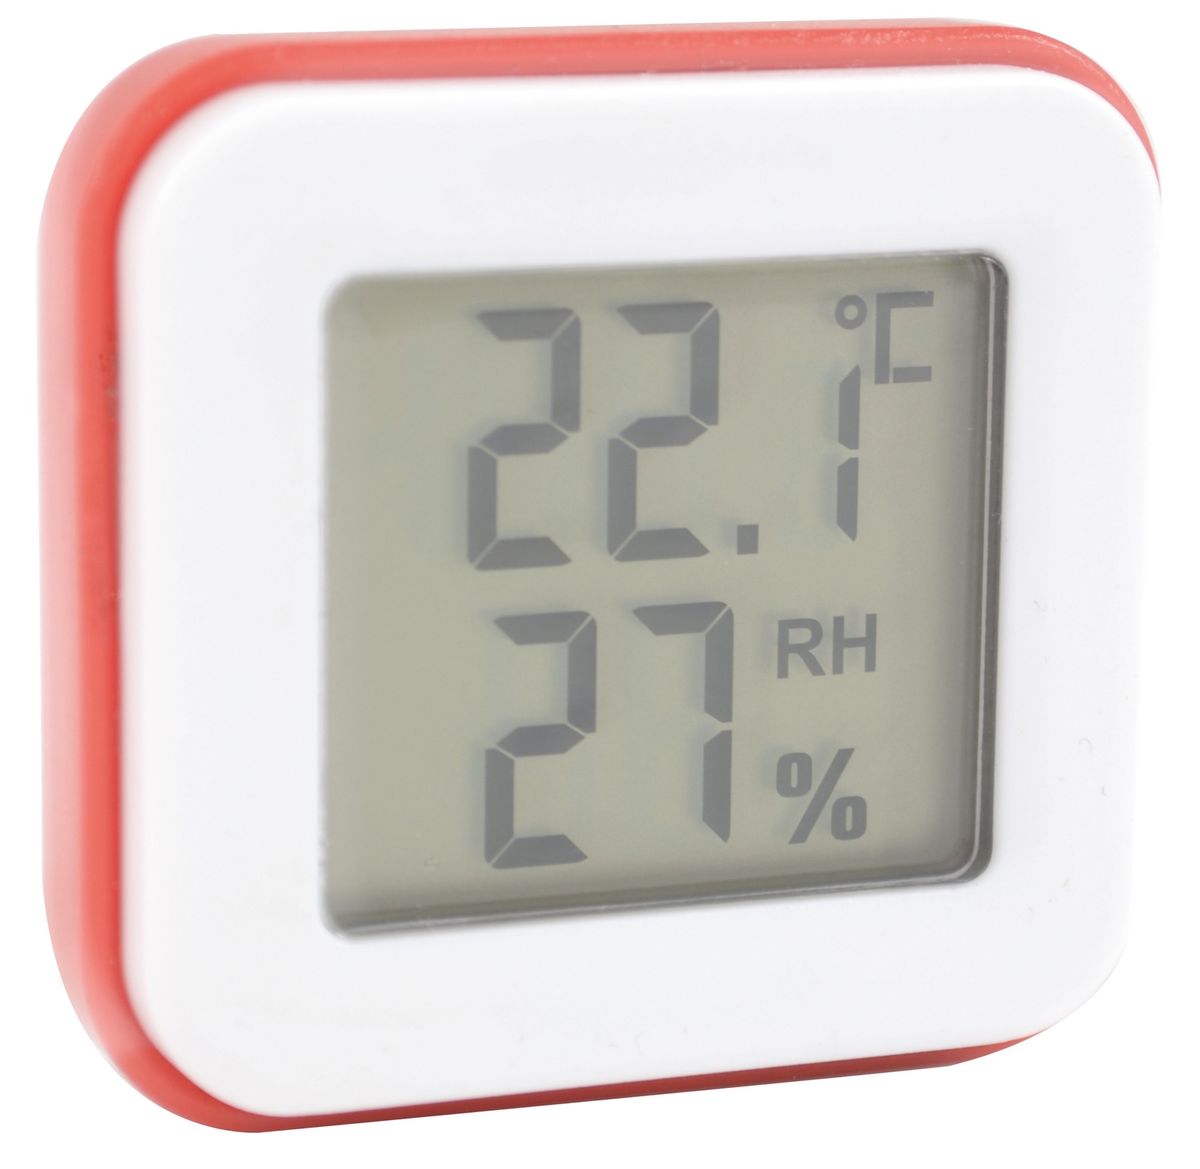 Mini Thermometre Hygrometre Electronique